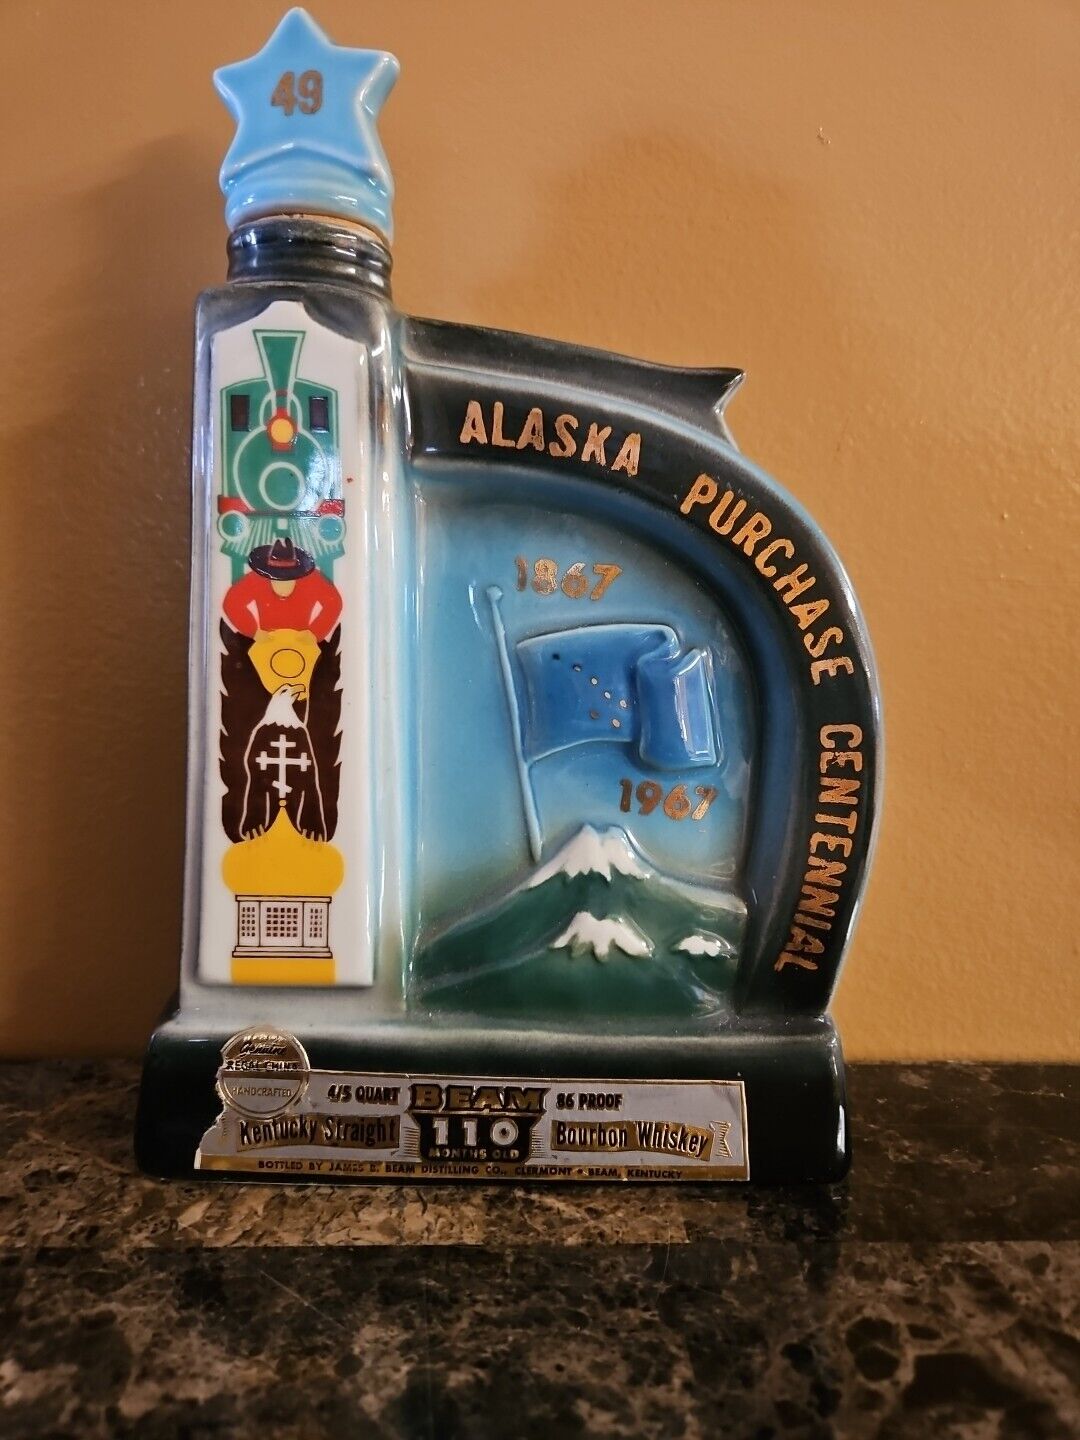 Jim Beam Alaska Purchase Centennial Purchase North to the Future 1867-1967